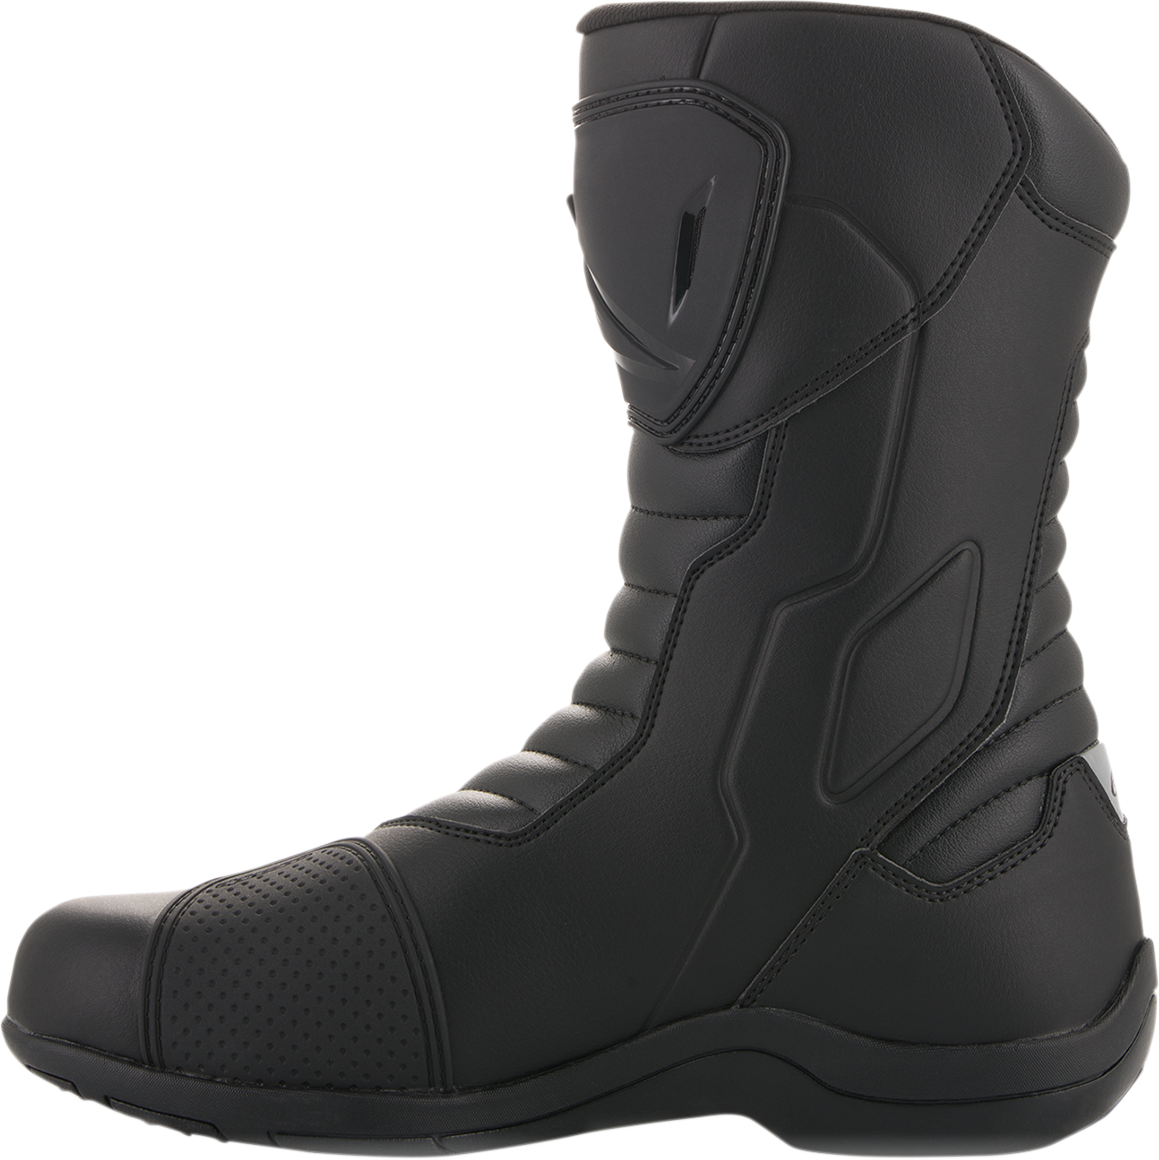 ALPINESTARS Radon Drystar® Boots - Black - US 8 / EU 42 2441518-10-42